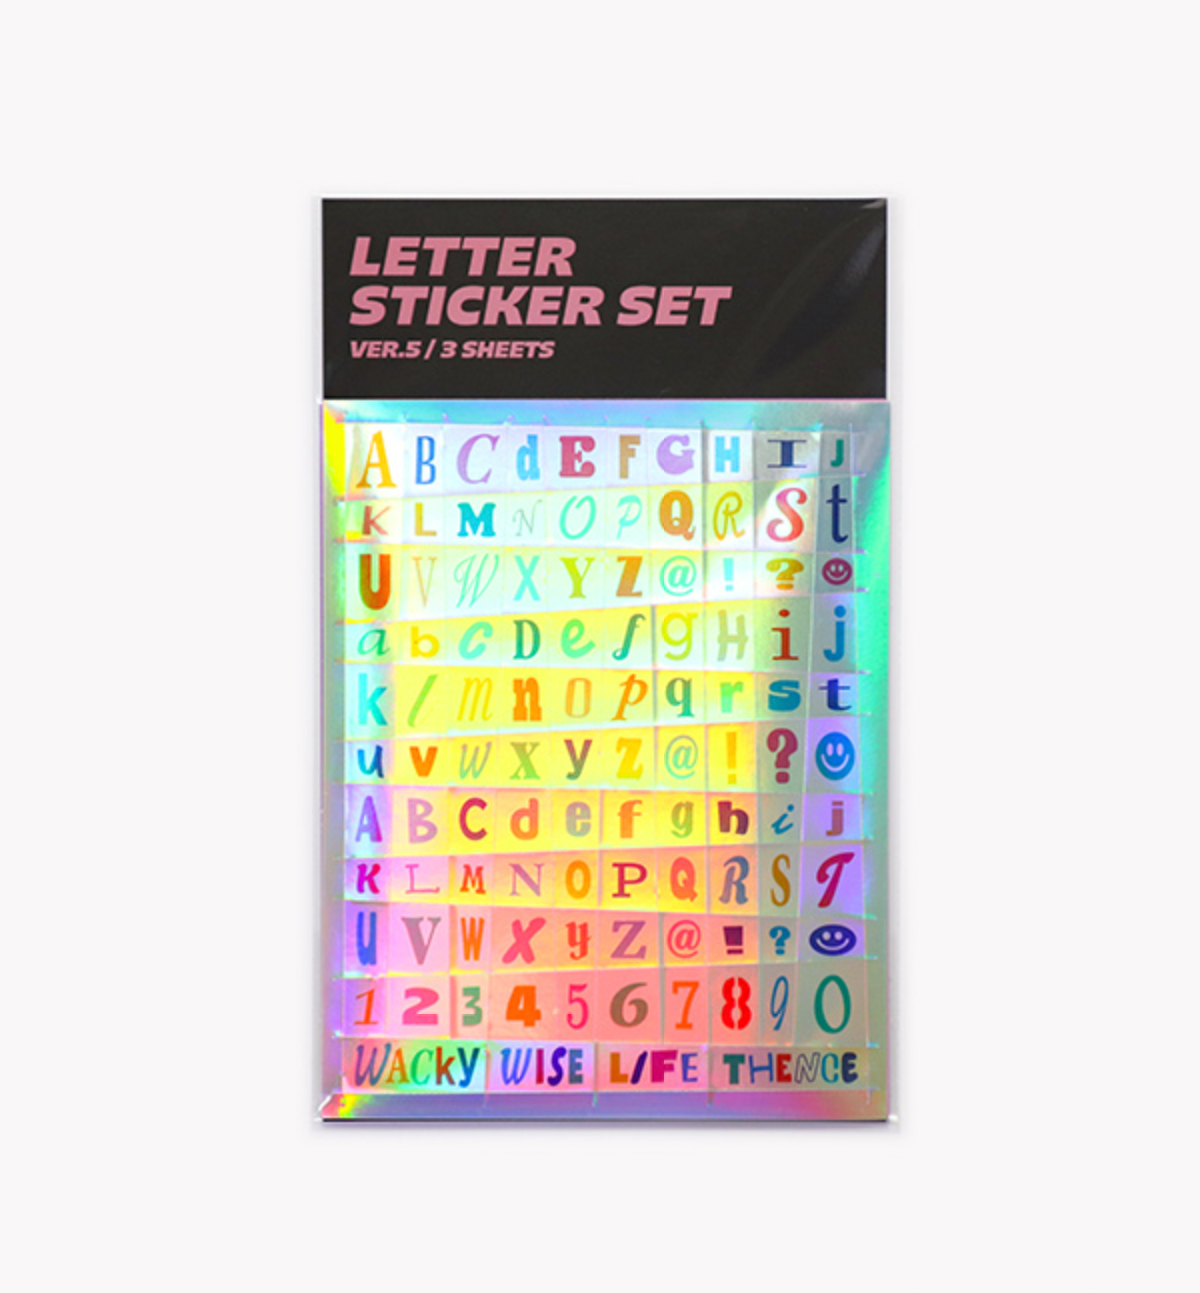 Letter Sticker Set Ver.5